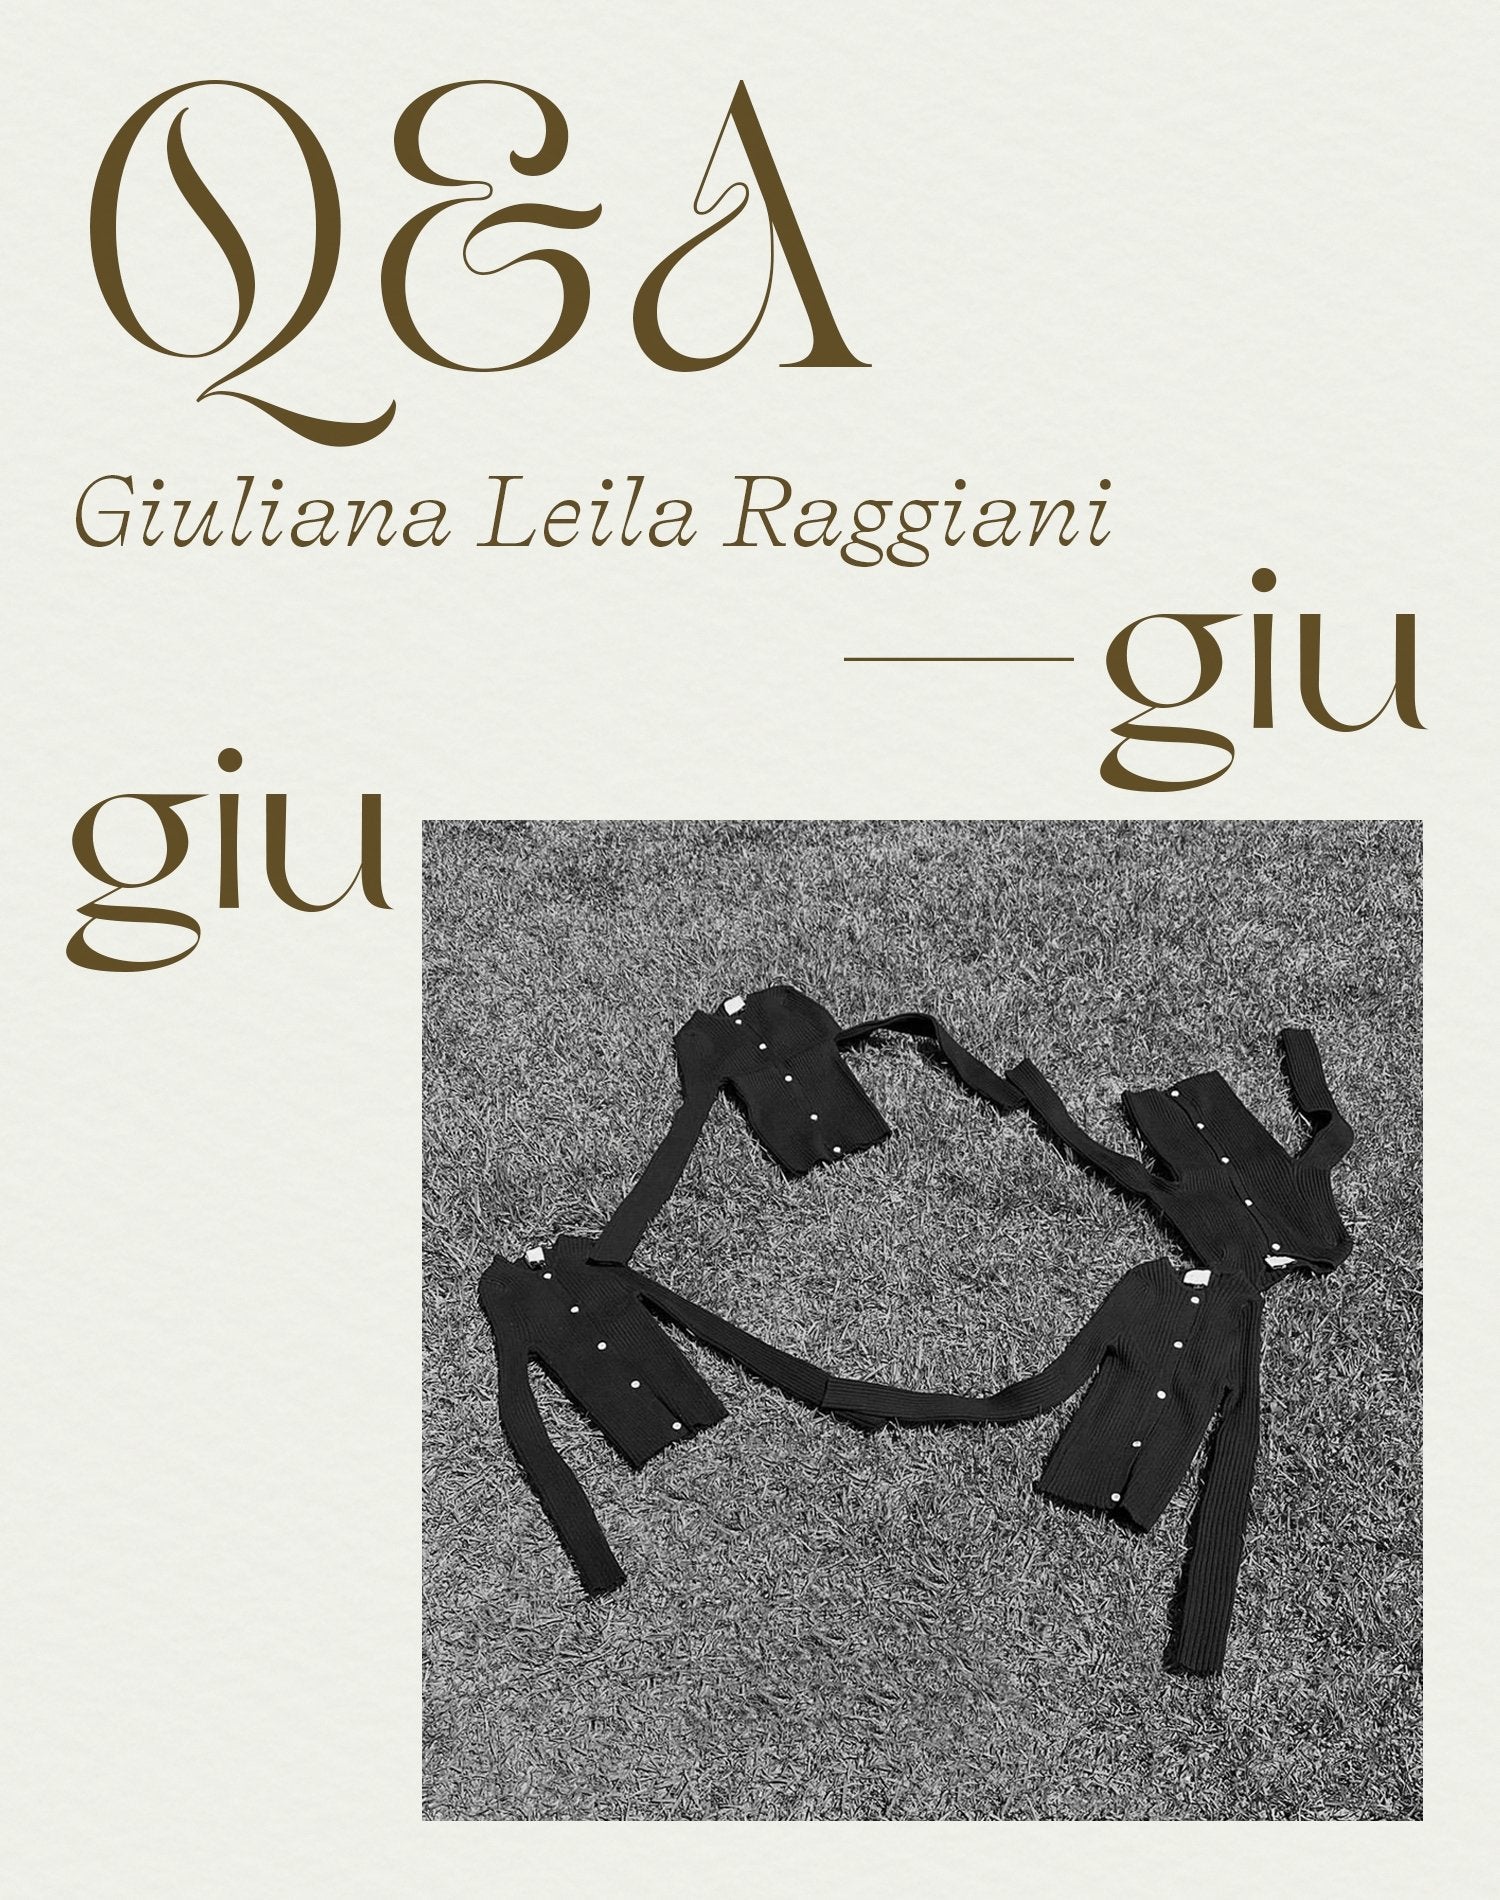 Q&A • Giuliana Raggiani of giu giu